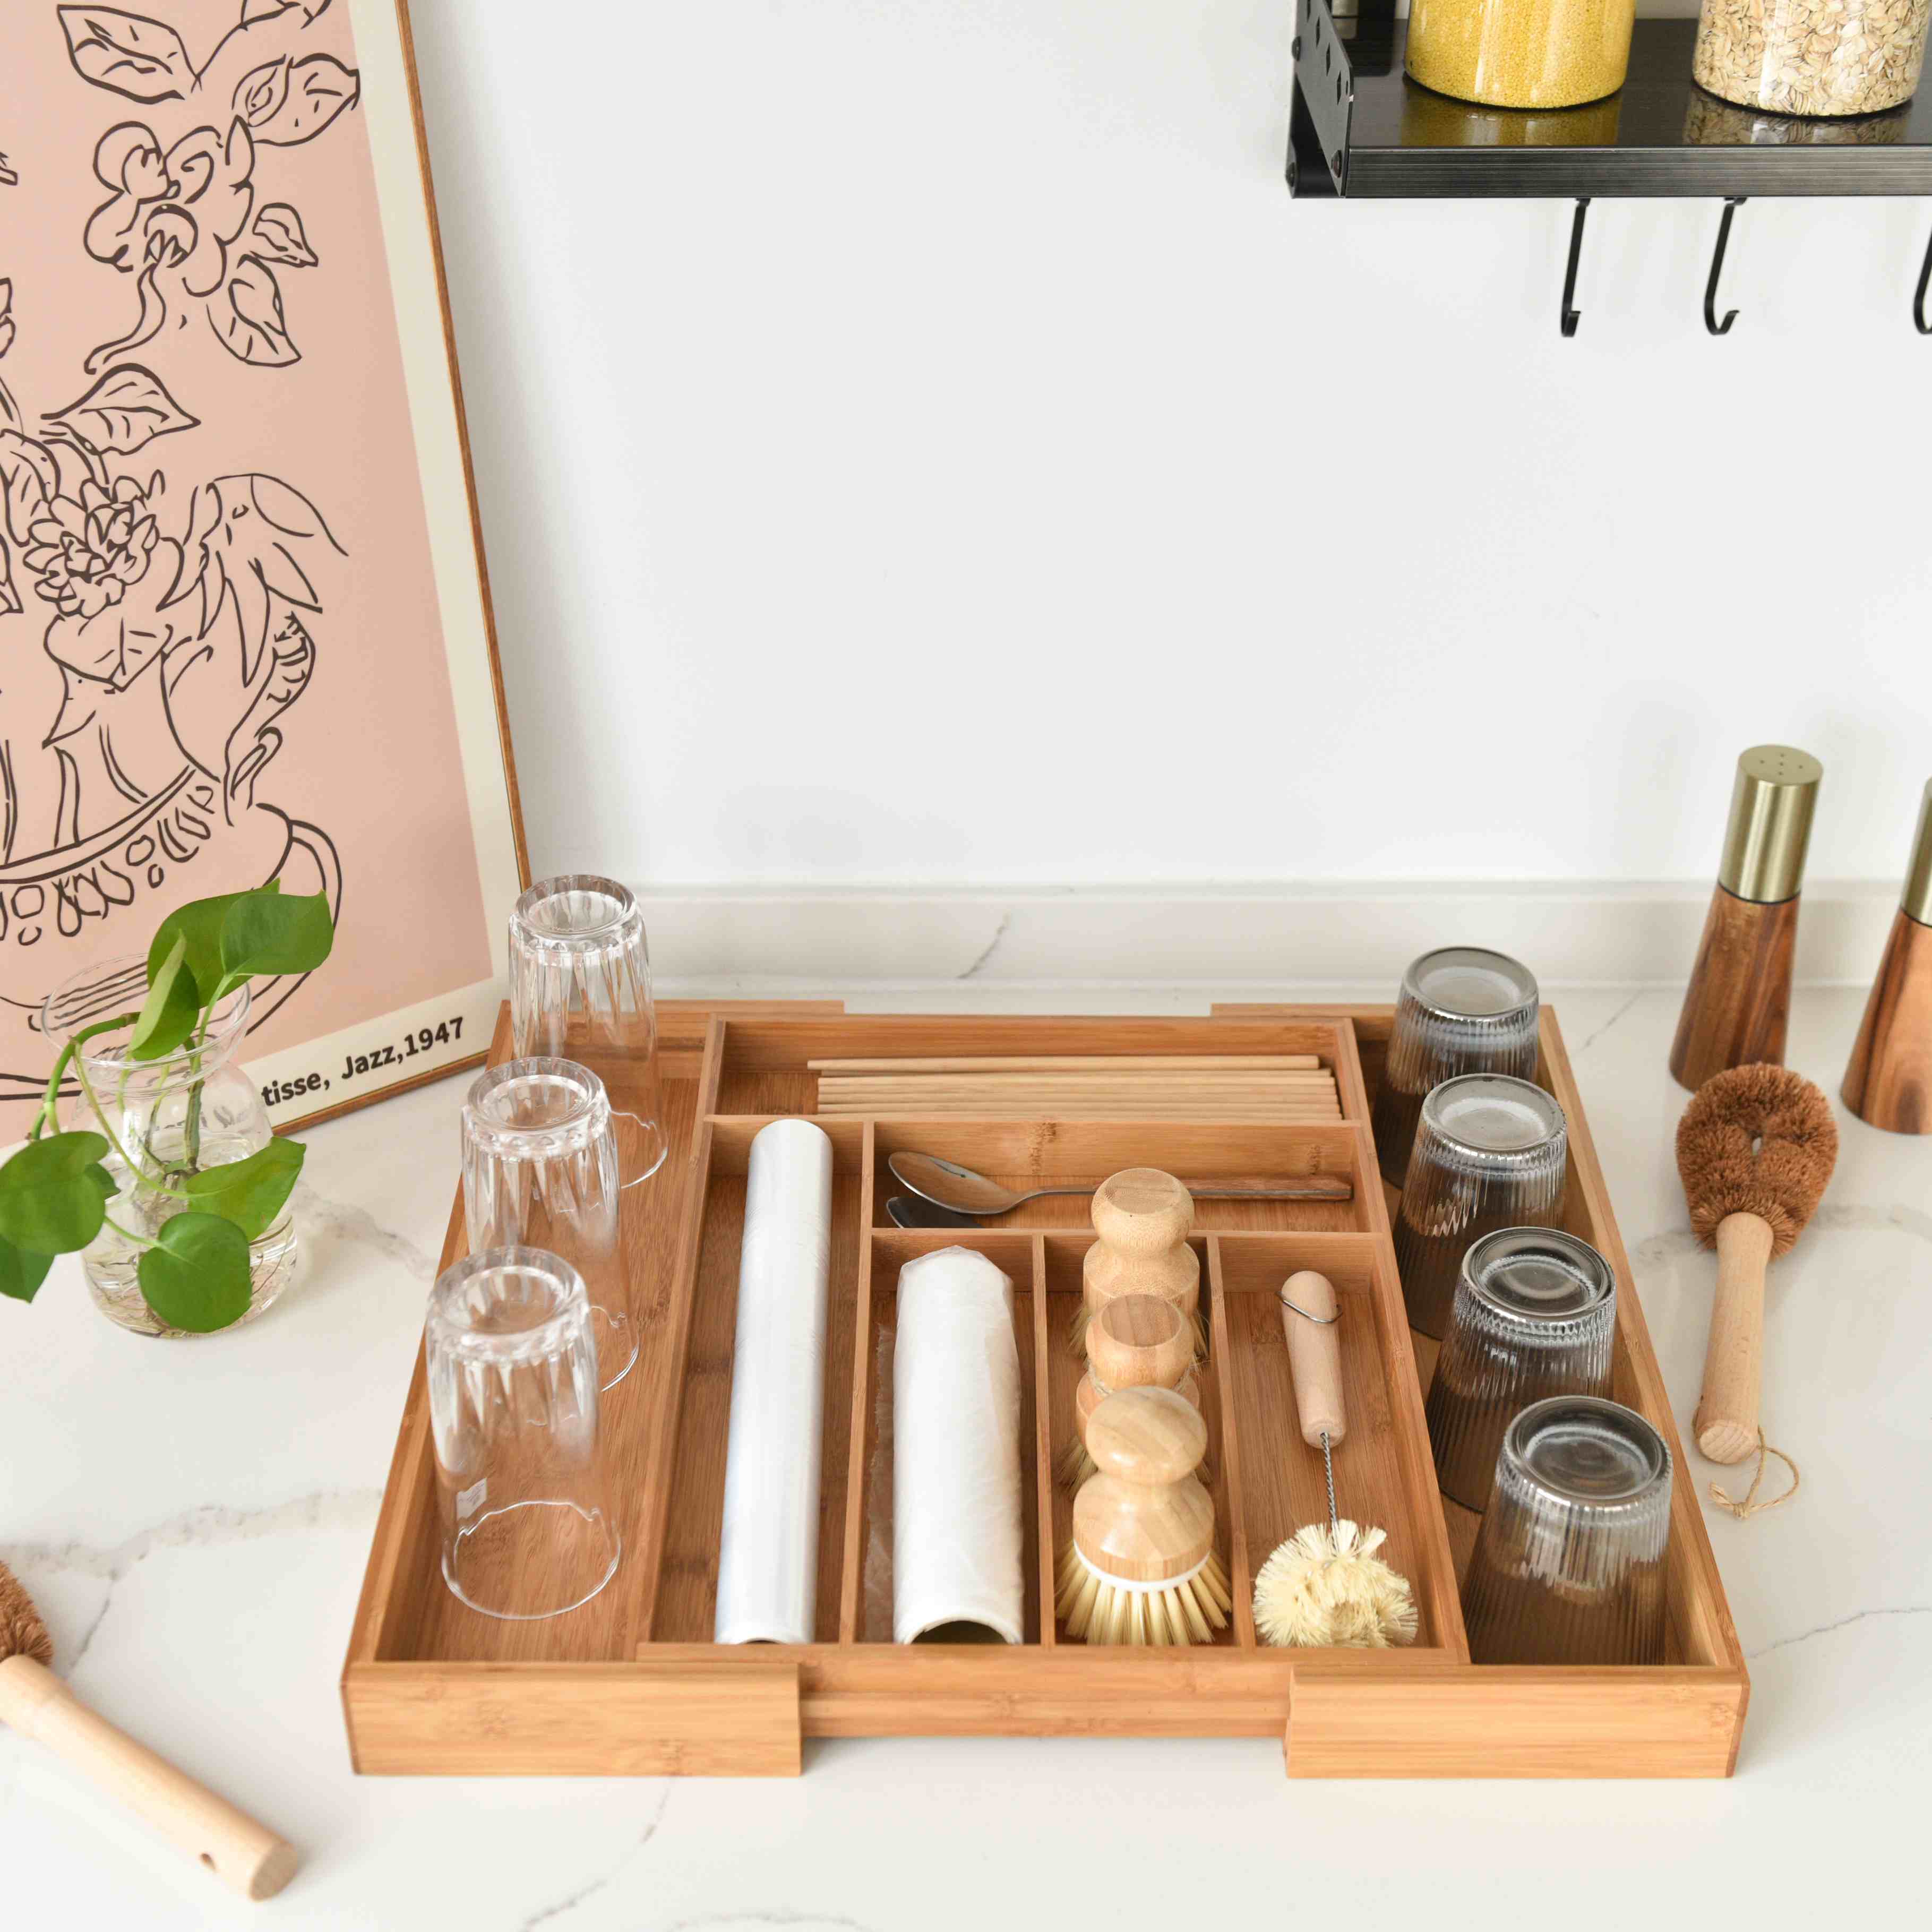 Premium Adjustable Wood Kitchen Drawer Organizer for Silverware / Cutlery / Makeup / Clothes